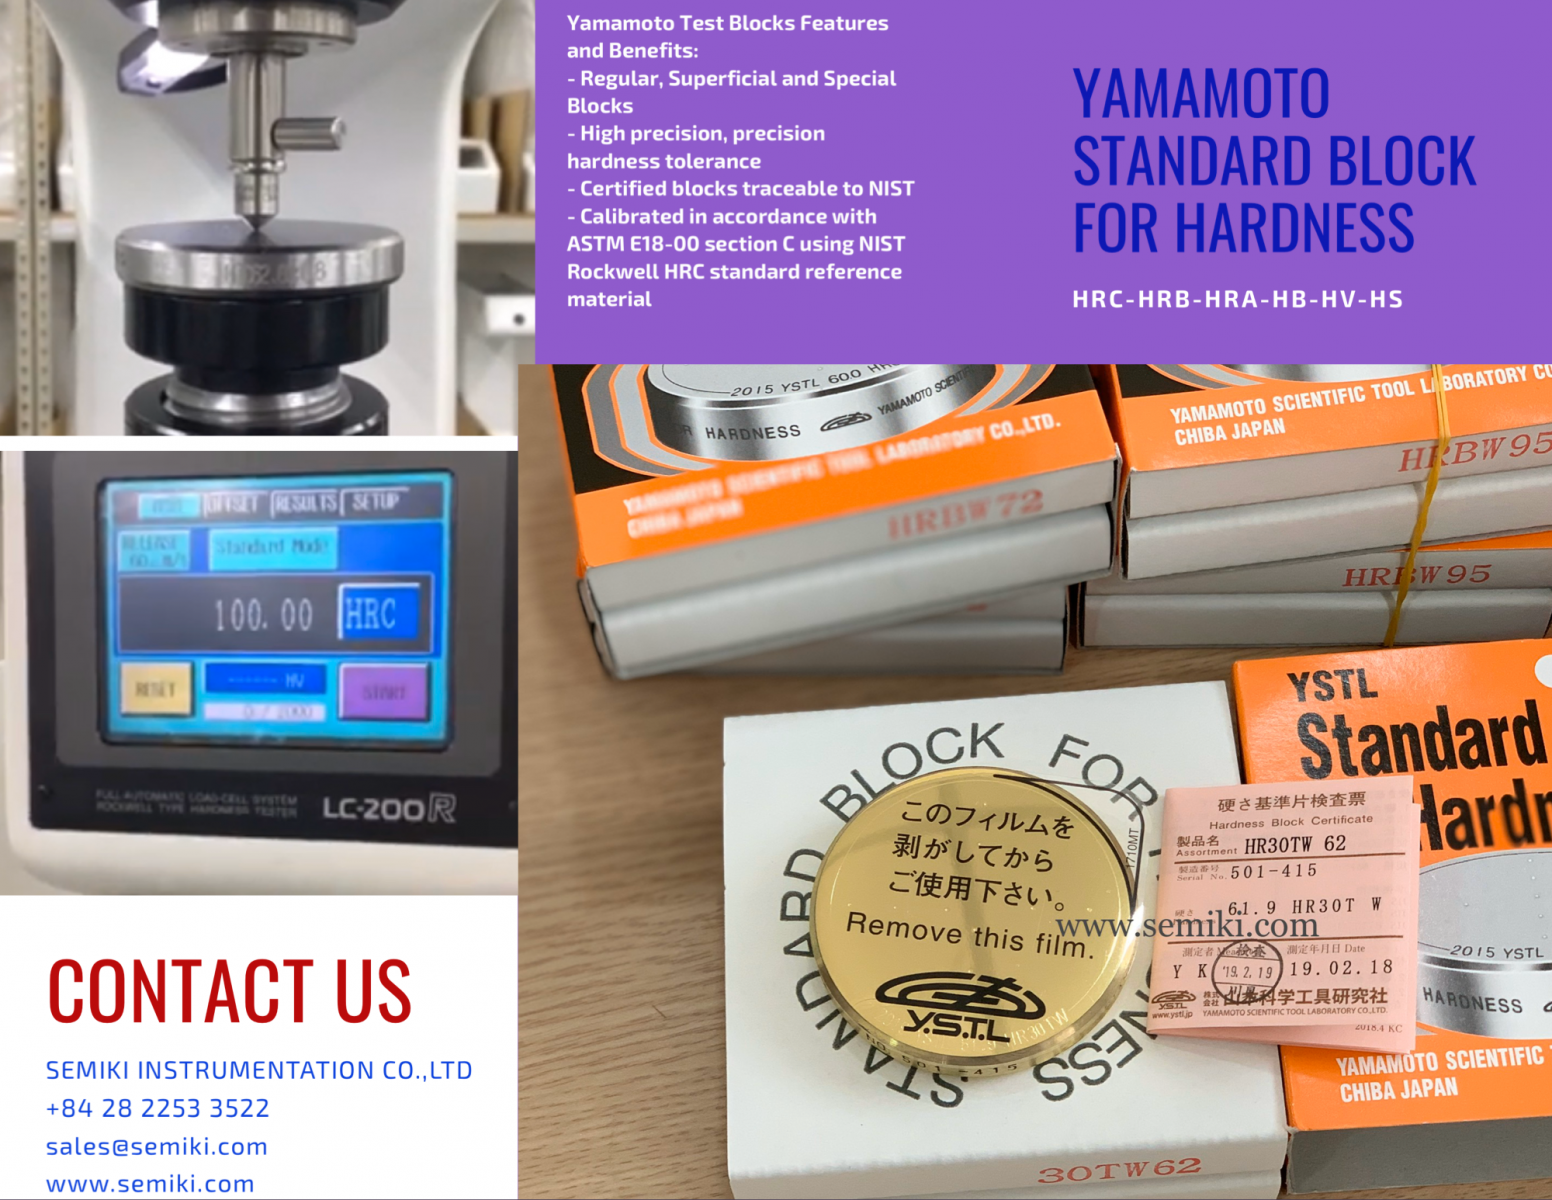 yamamoto standard block for hardness